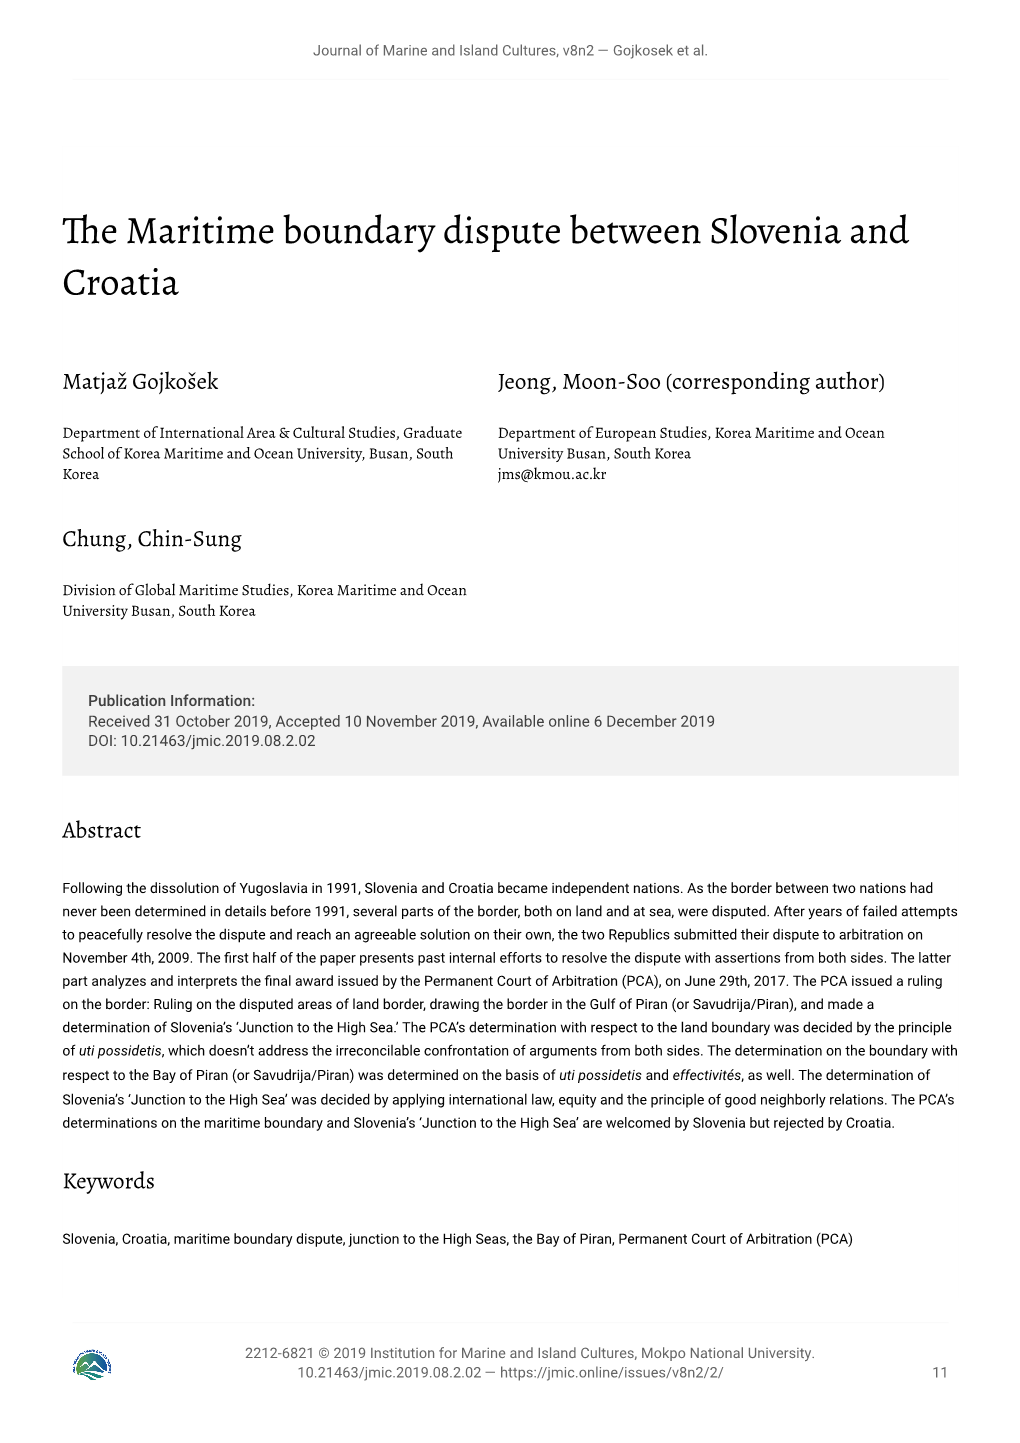 The Maritime Boundary Dispute Between Slovenia and Croatia